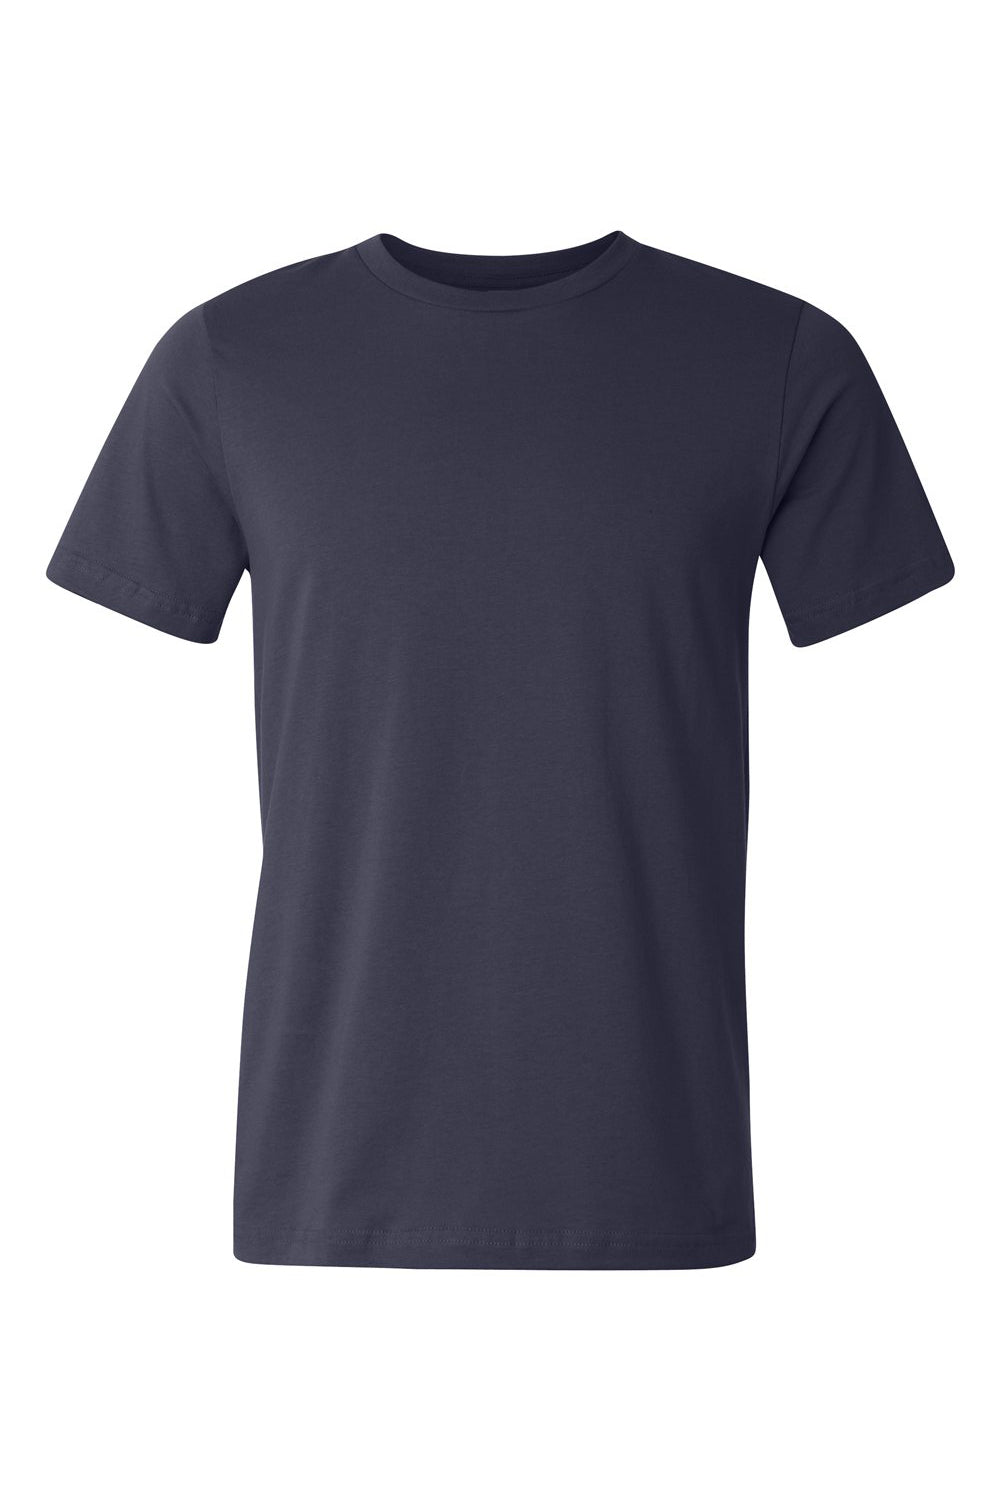 Bella + Canvas 3001U/3001USA Mens USA Made Jersey Short Sleeve Crewneck T-Shirt Navy Blue Flat Front